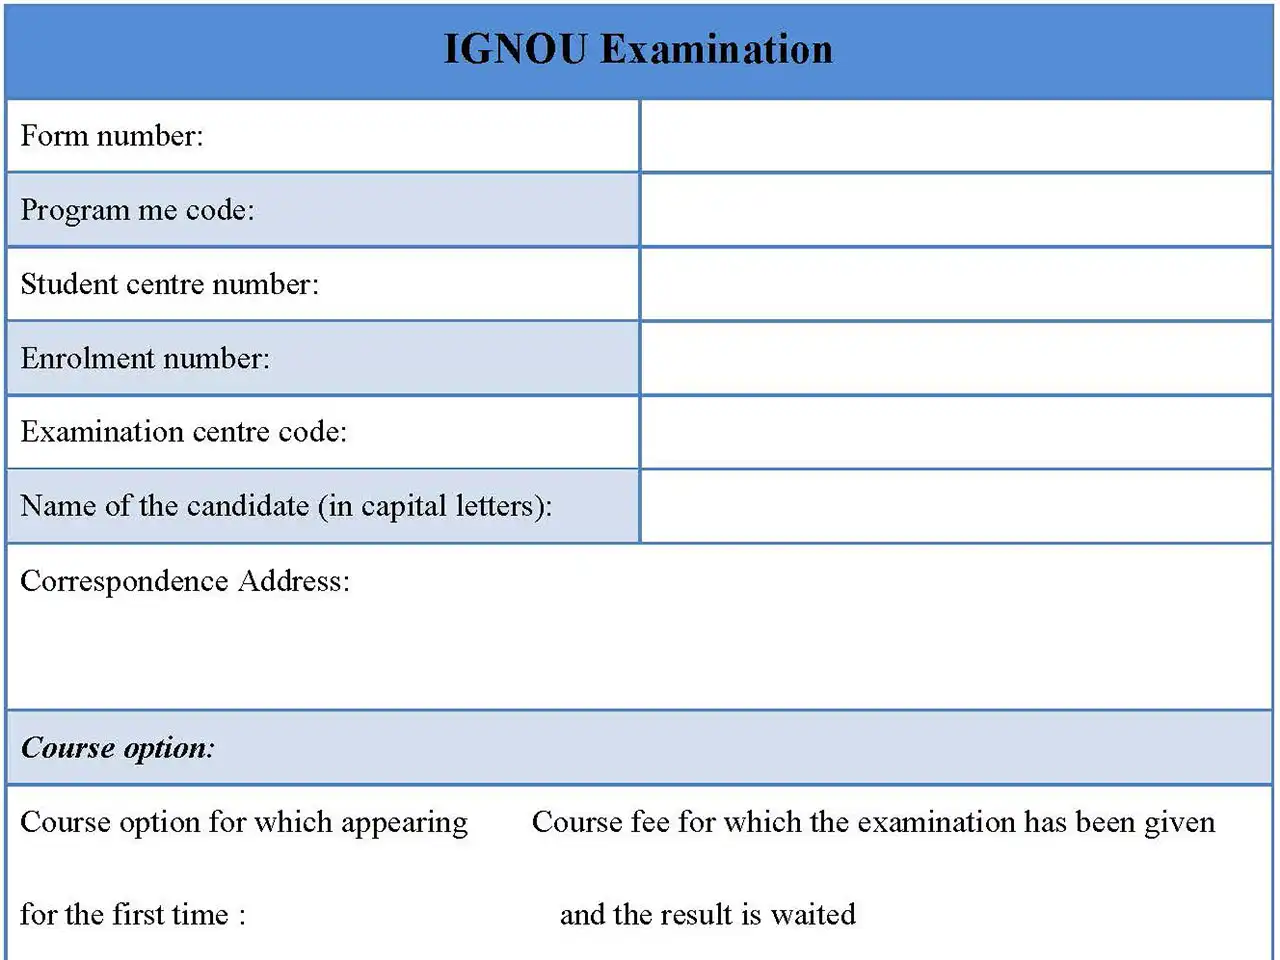 IGNOU Examination Form